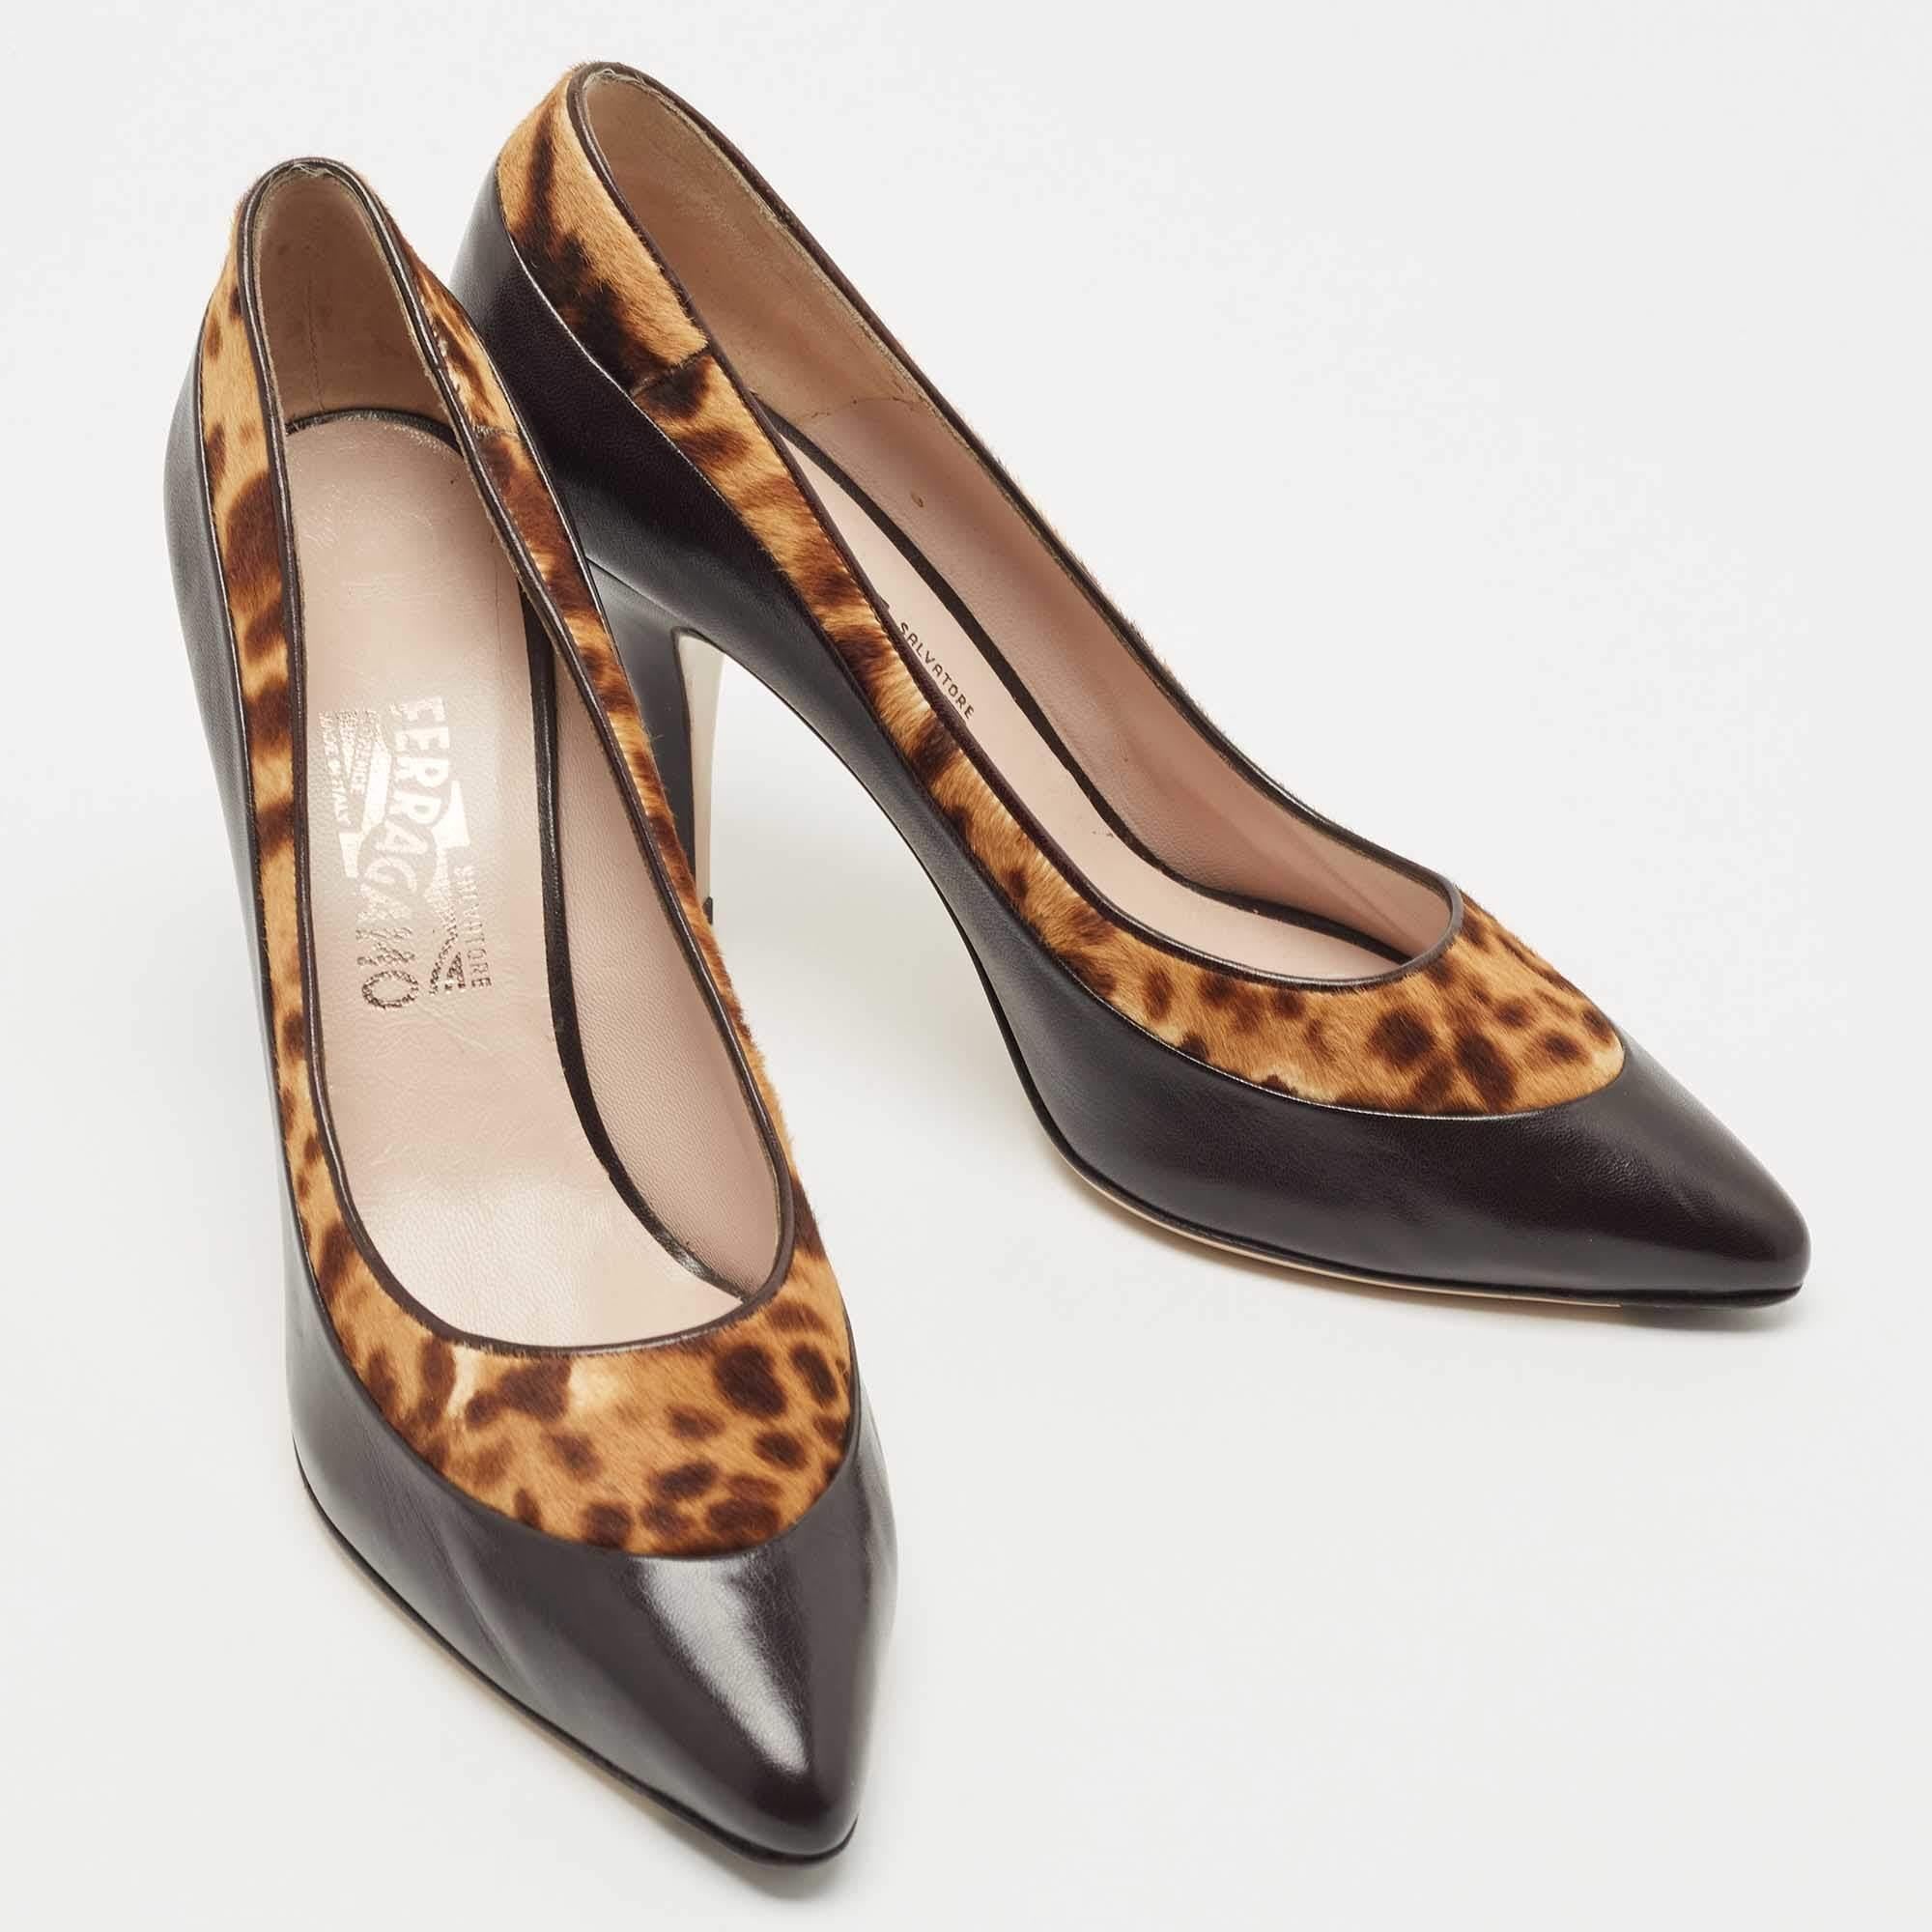 Salvatore Ferragamo Black/Leopard Print Leather Pointed Toe Pumps Size 41 1